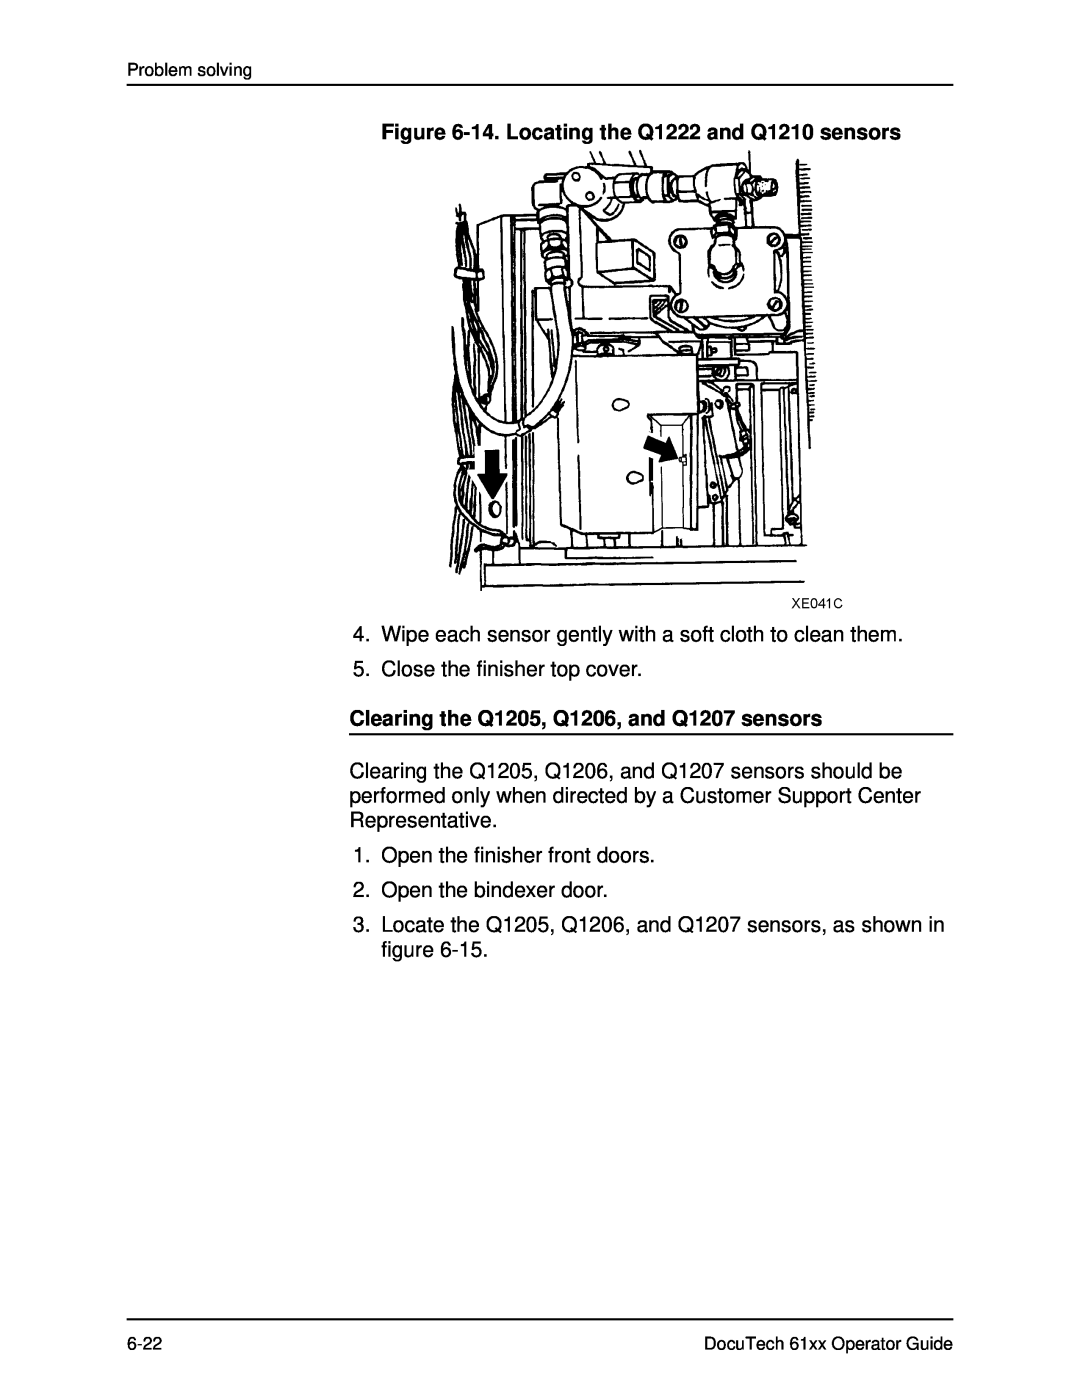 Xerox 61xx manual 14. Locating the Q1222 and Q1210 sensors, Clearing the Q1205, Q1206, and Q1207 sensors 